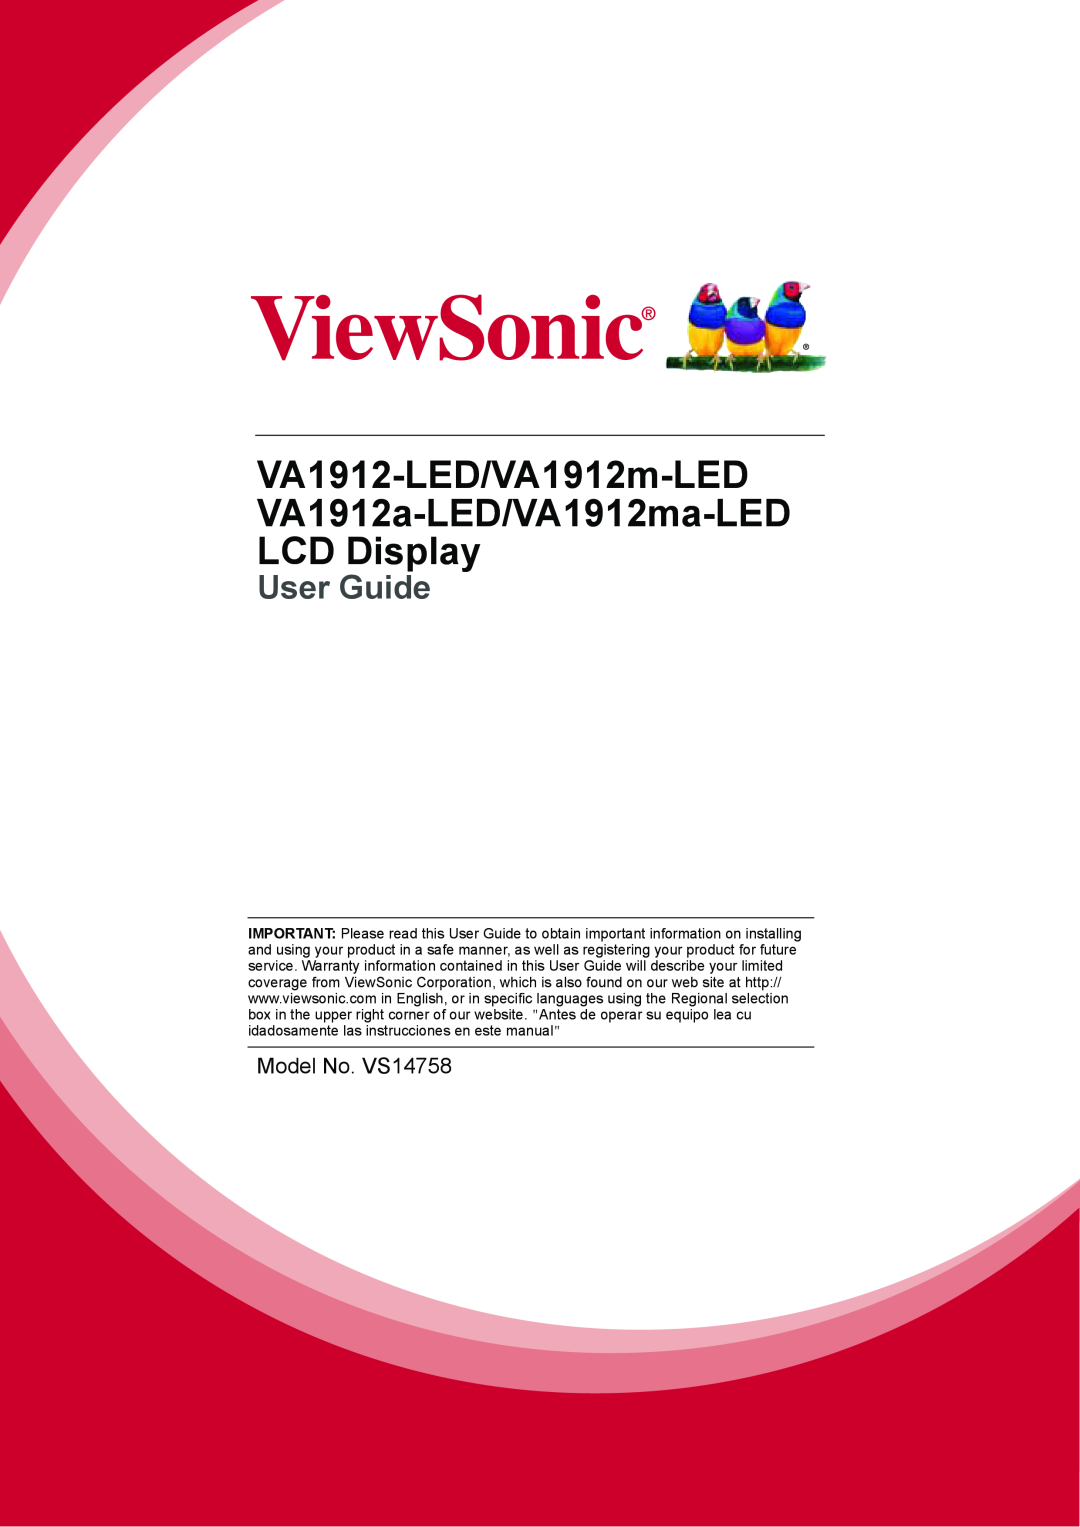 ViewSonic warranty VA1912-LED/VA1912m-LED VA1912a-LED/VA1912ma-LED, LCD Display, User Guide 